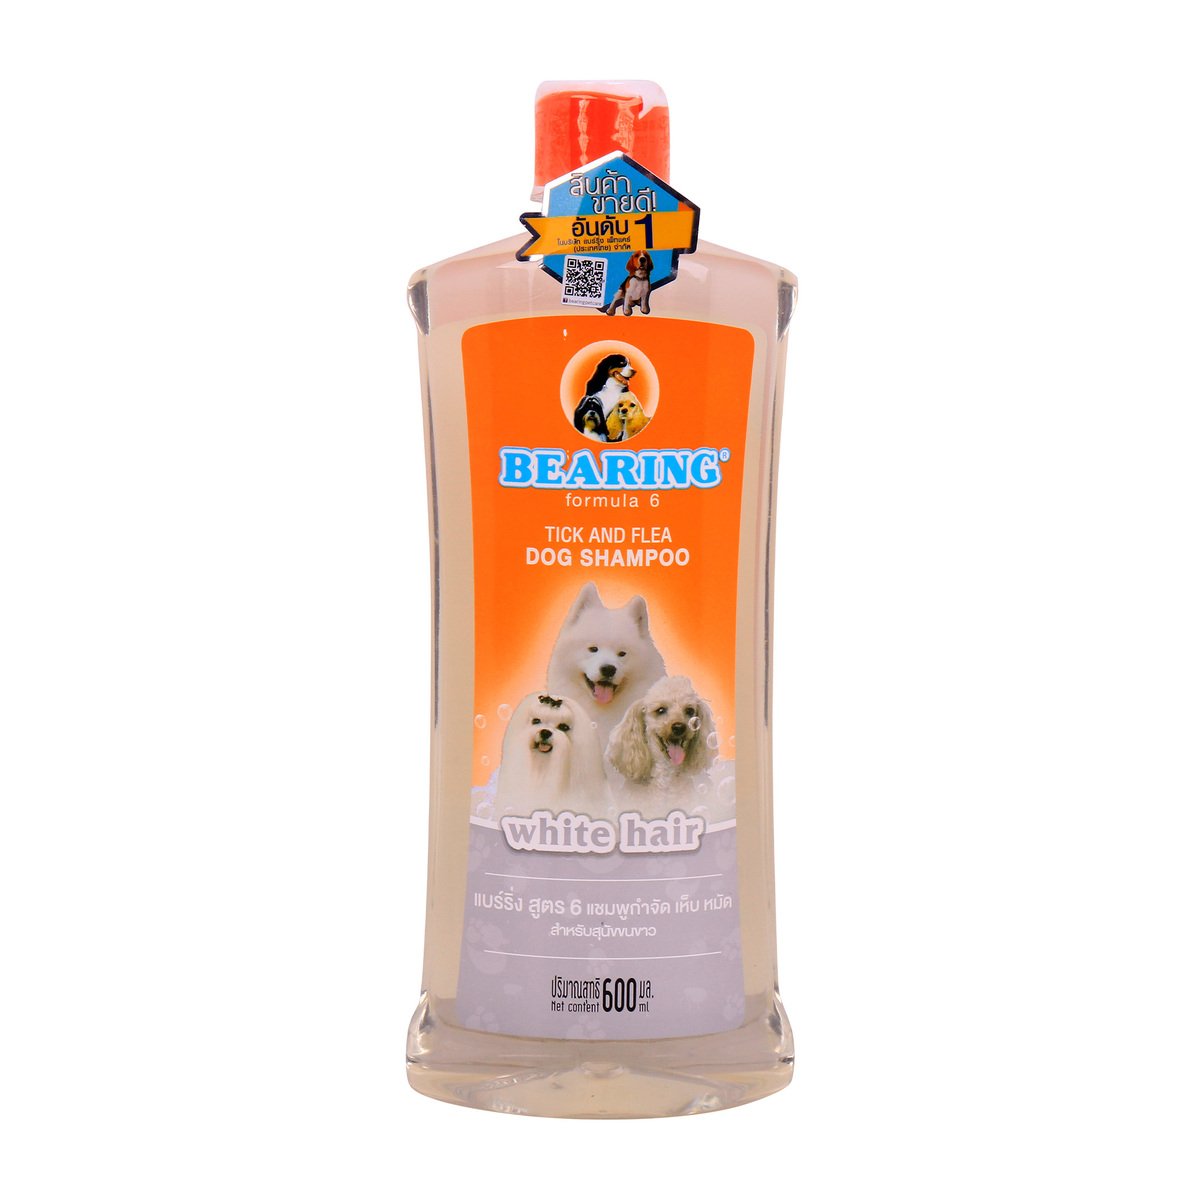 Bearing Tick & Flea Dog Shampoo White Hair, 600 ml